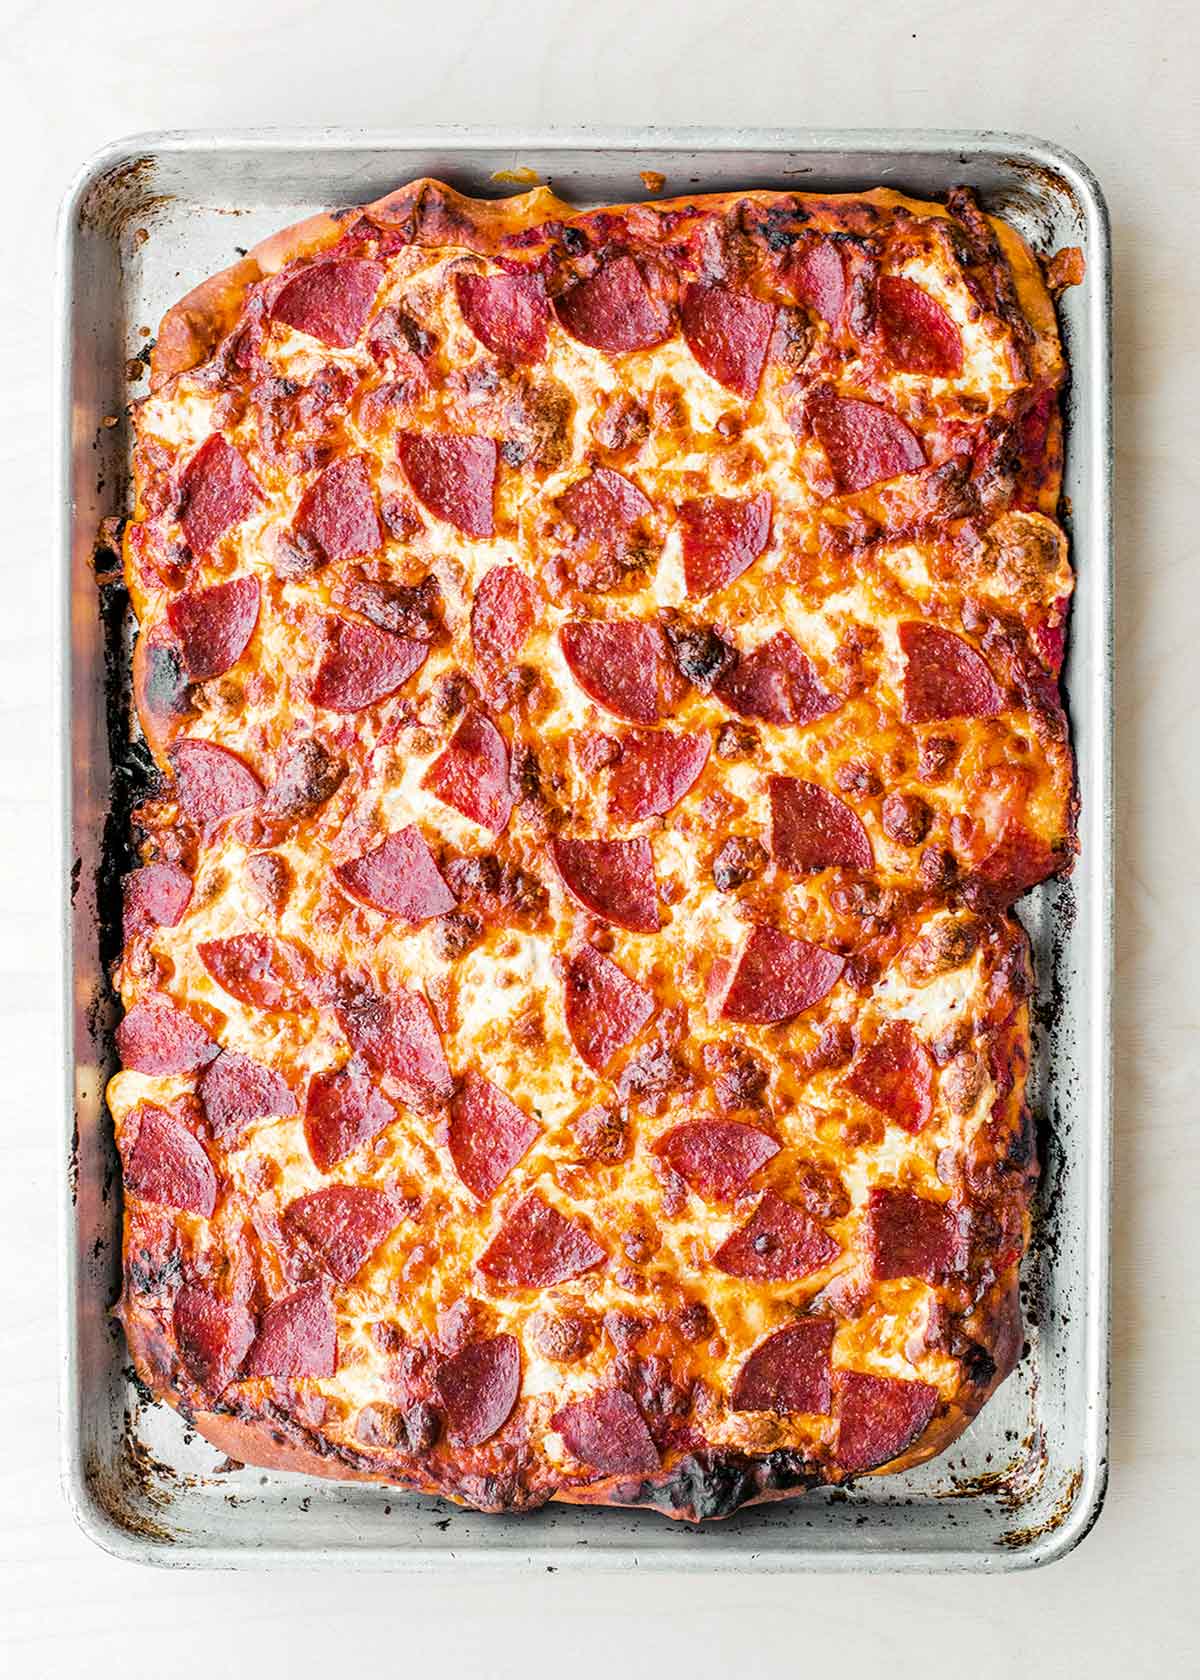 A pepperoni pan pizza in a rectangular baking sheet.